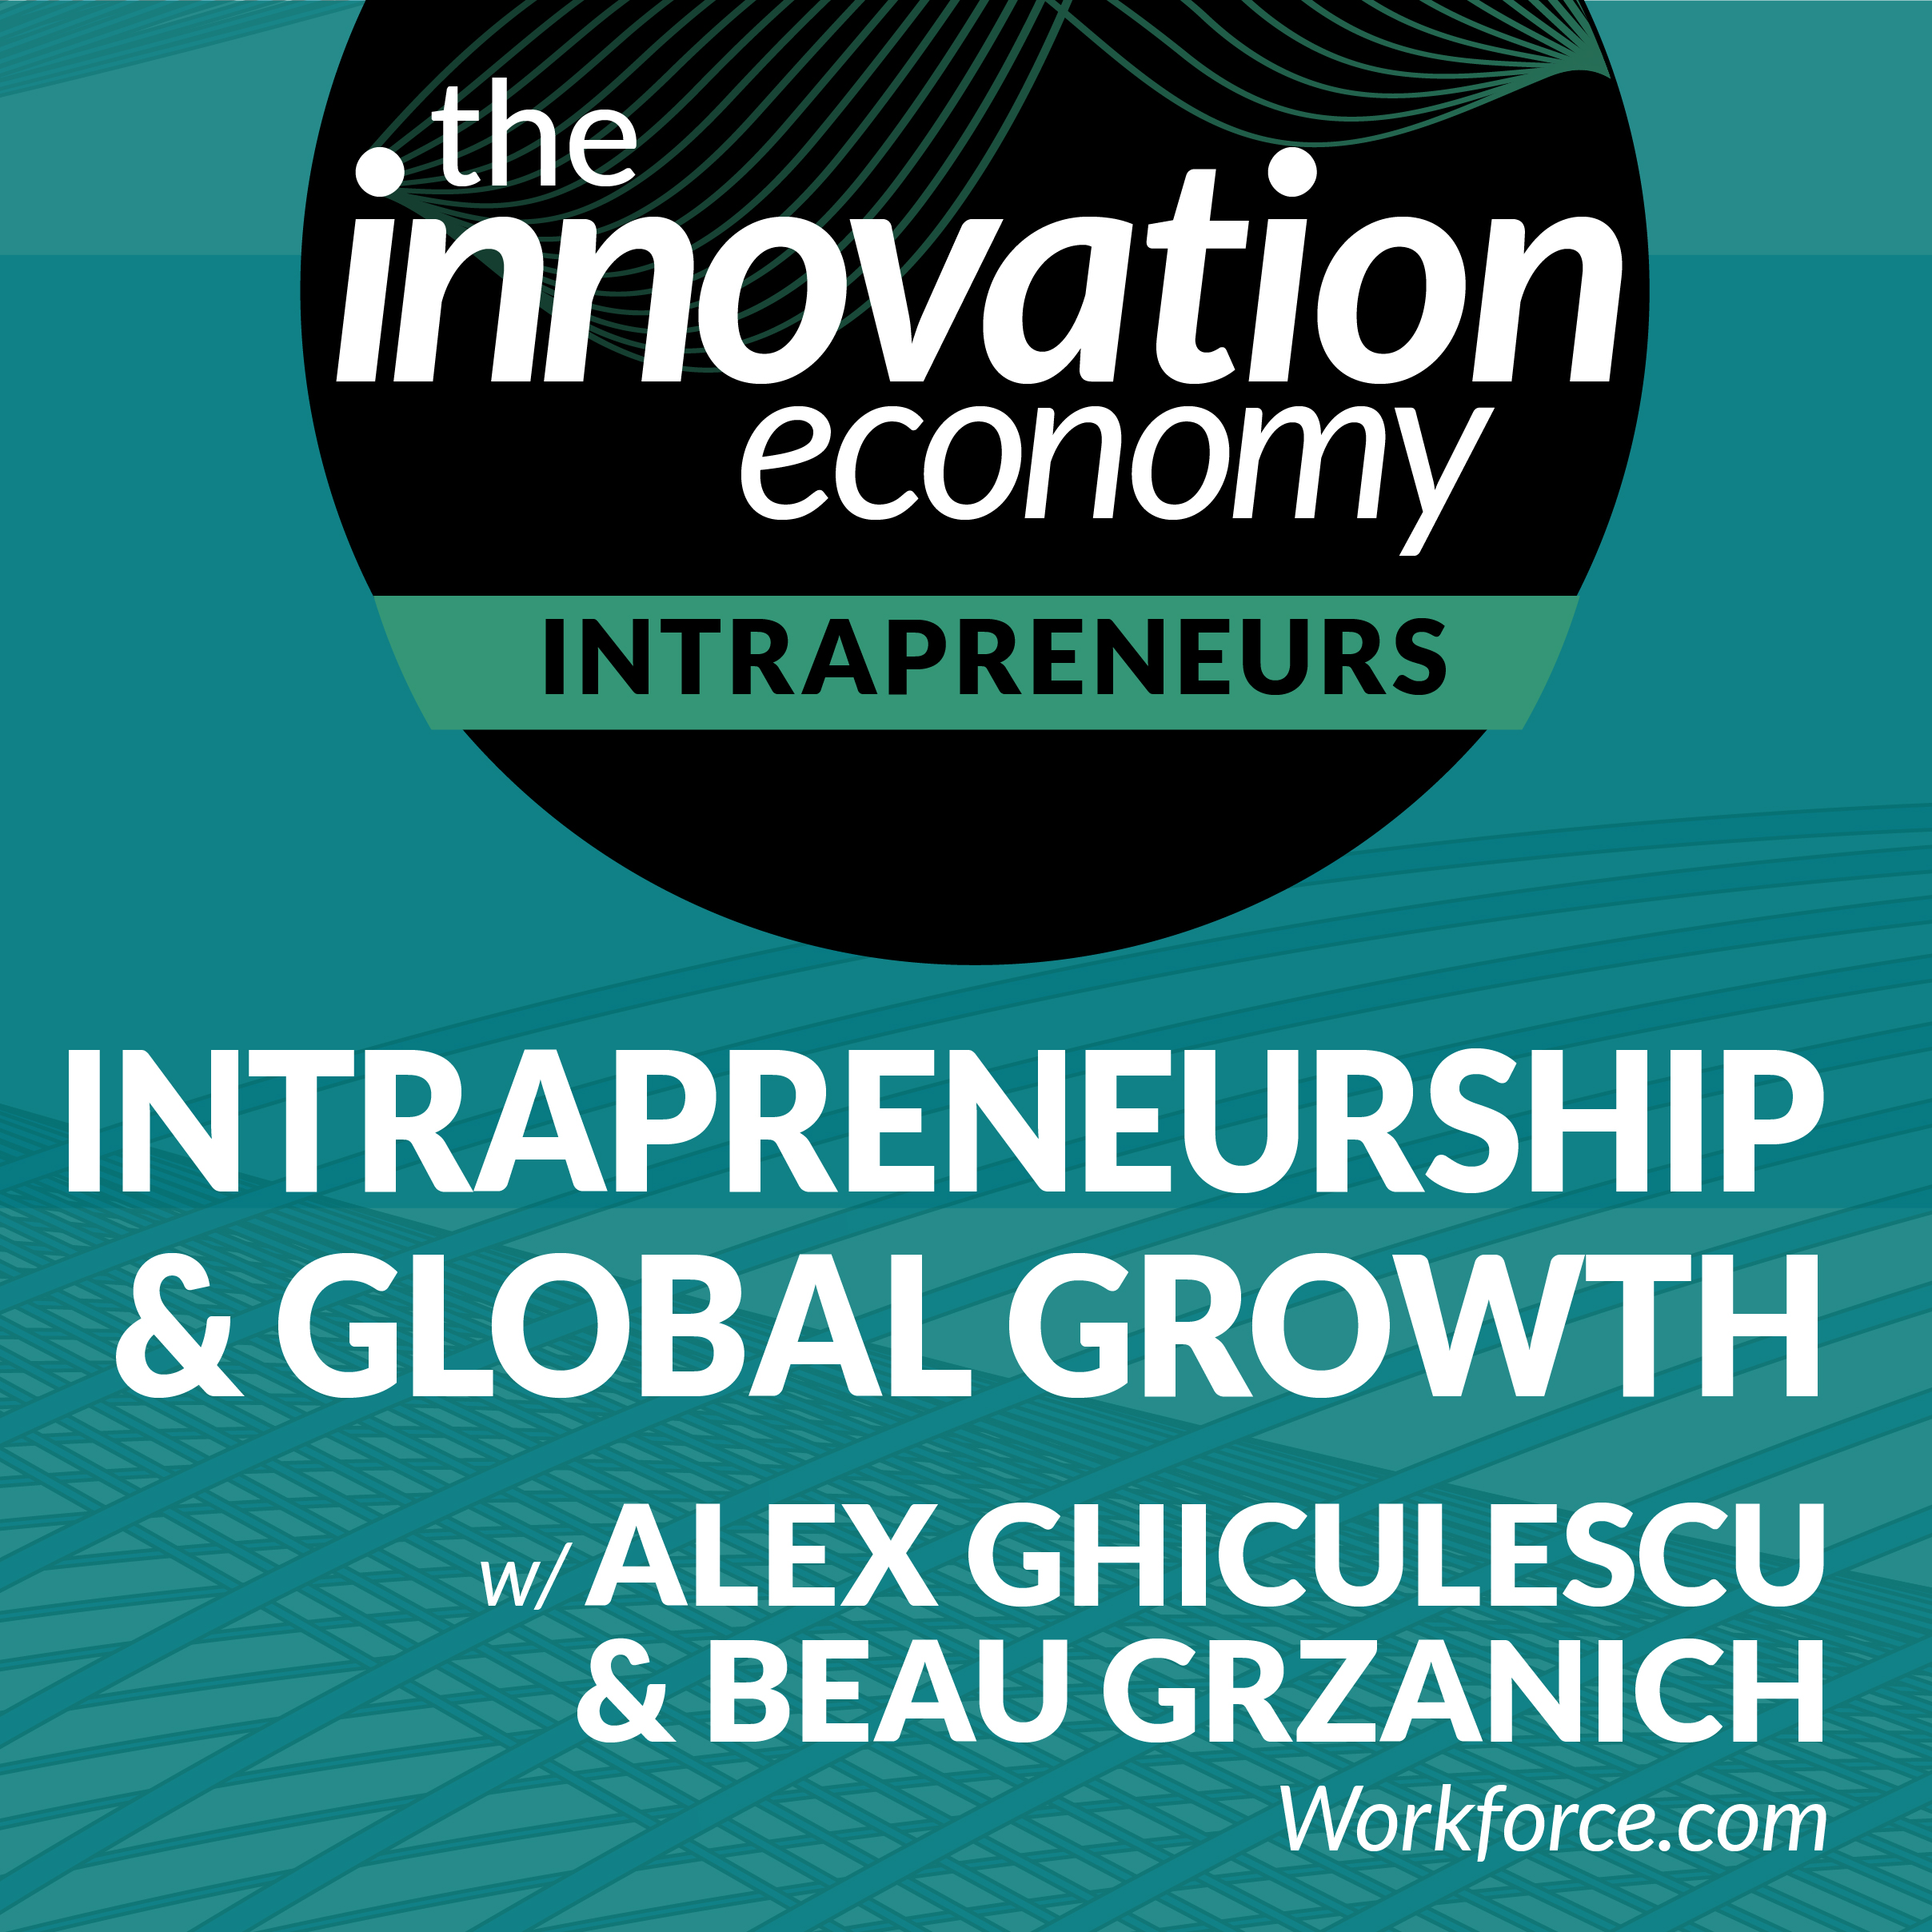 Intrapreneurship and global growth with Alex Ghiculescu and Beau Grzanich, Workforce.com